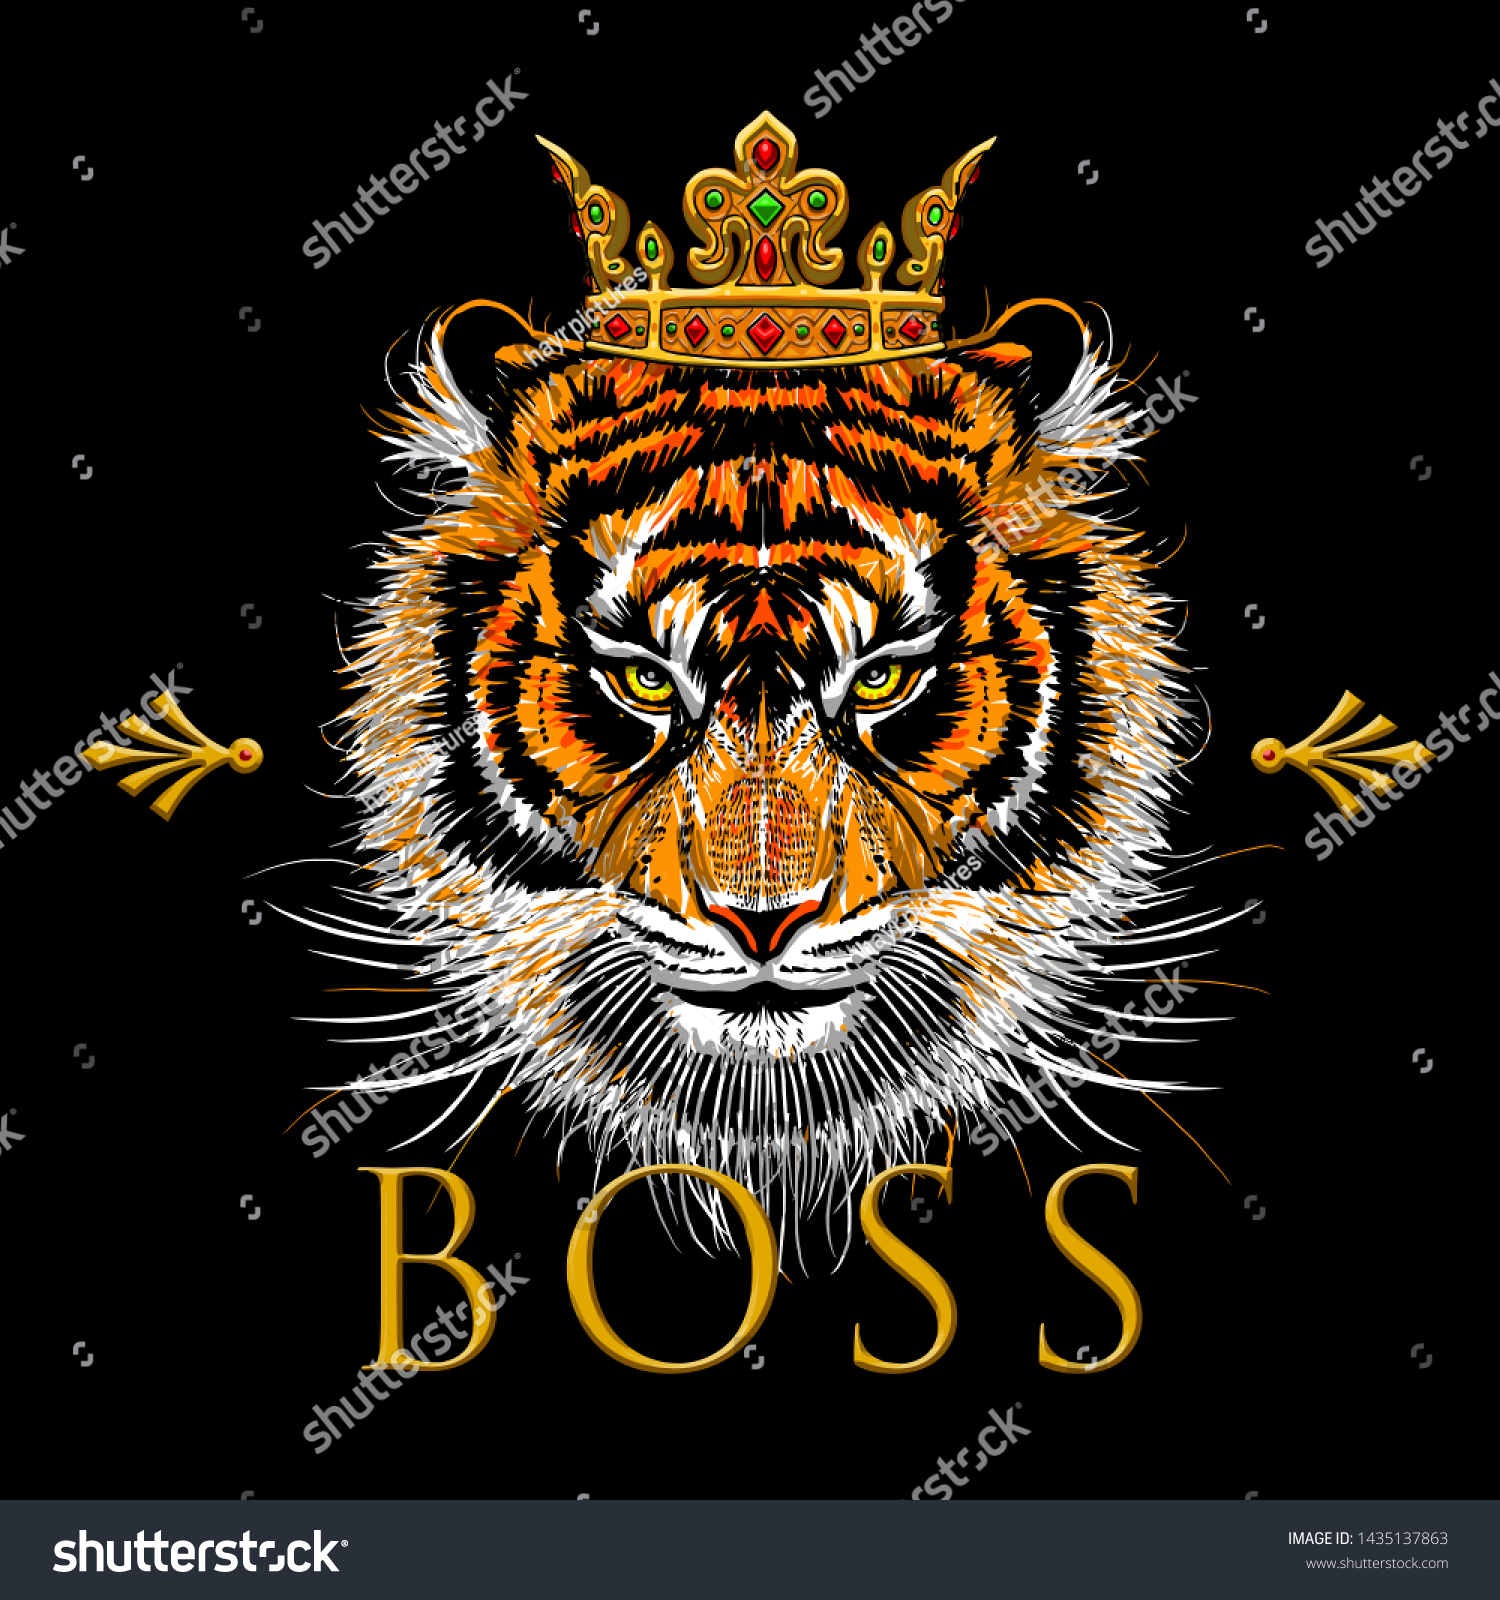 Тигр с короной на голове